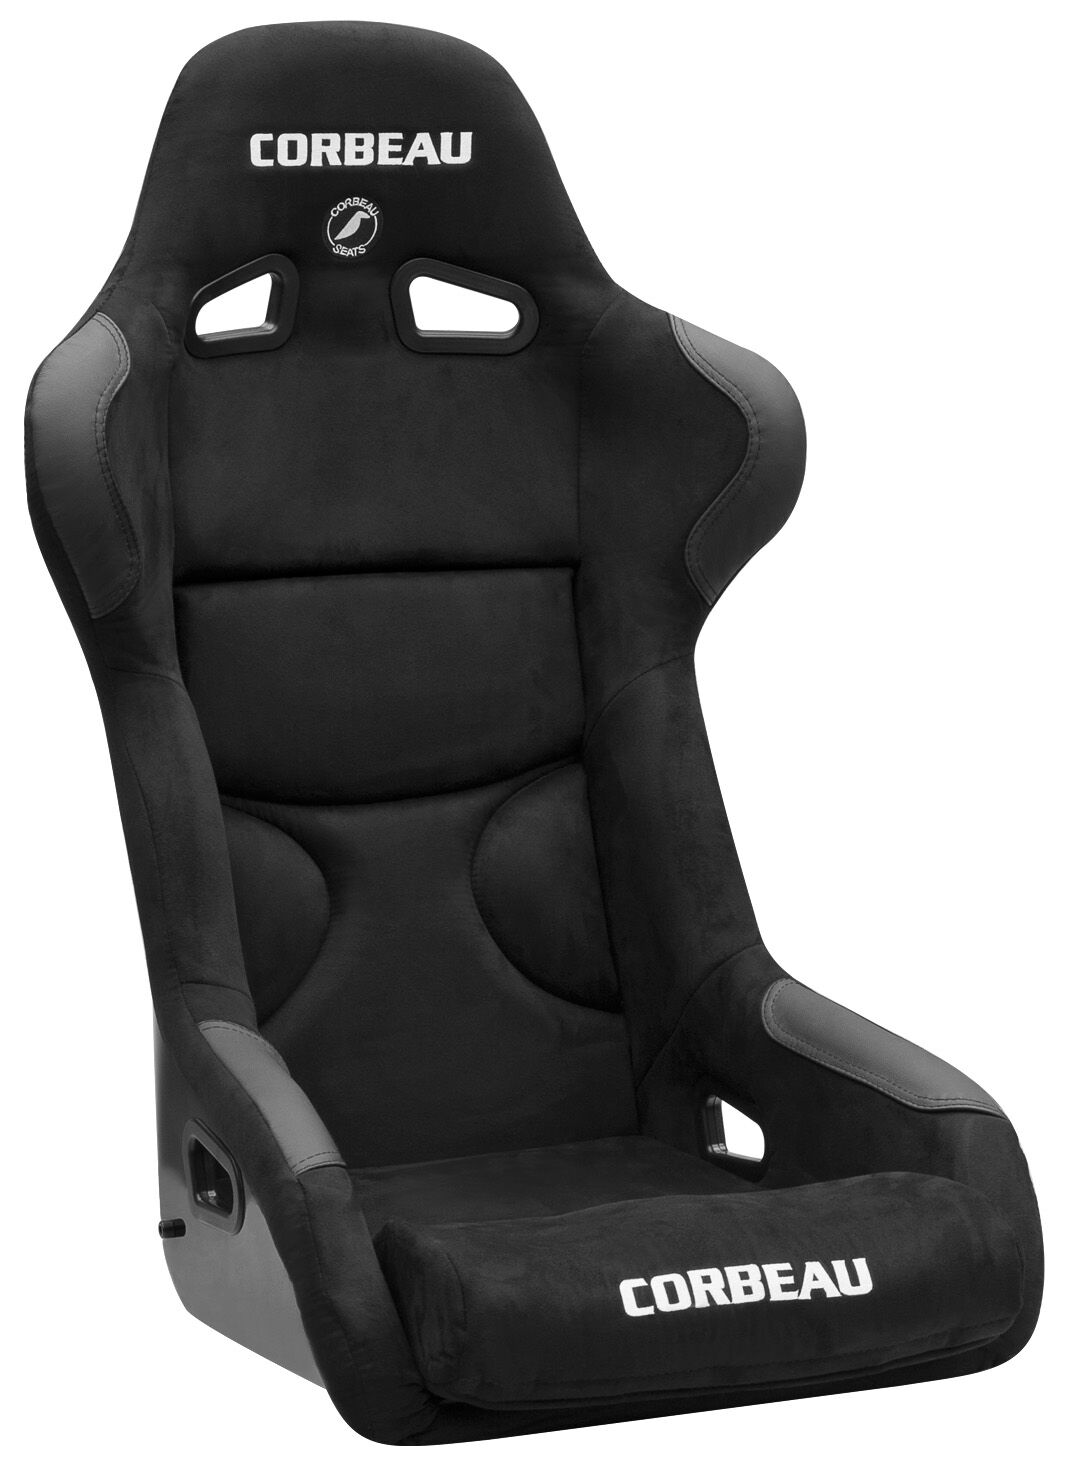 Corbeau FX1 Pro Seats - Black Microsuede